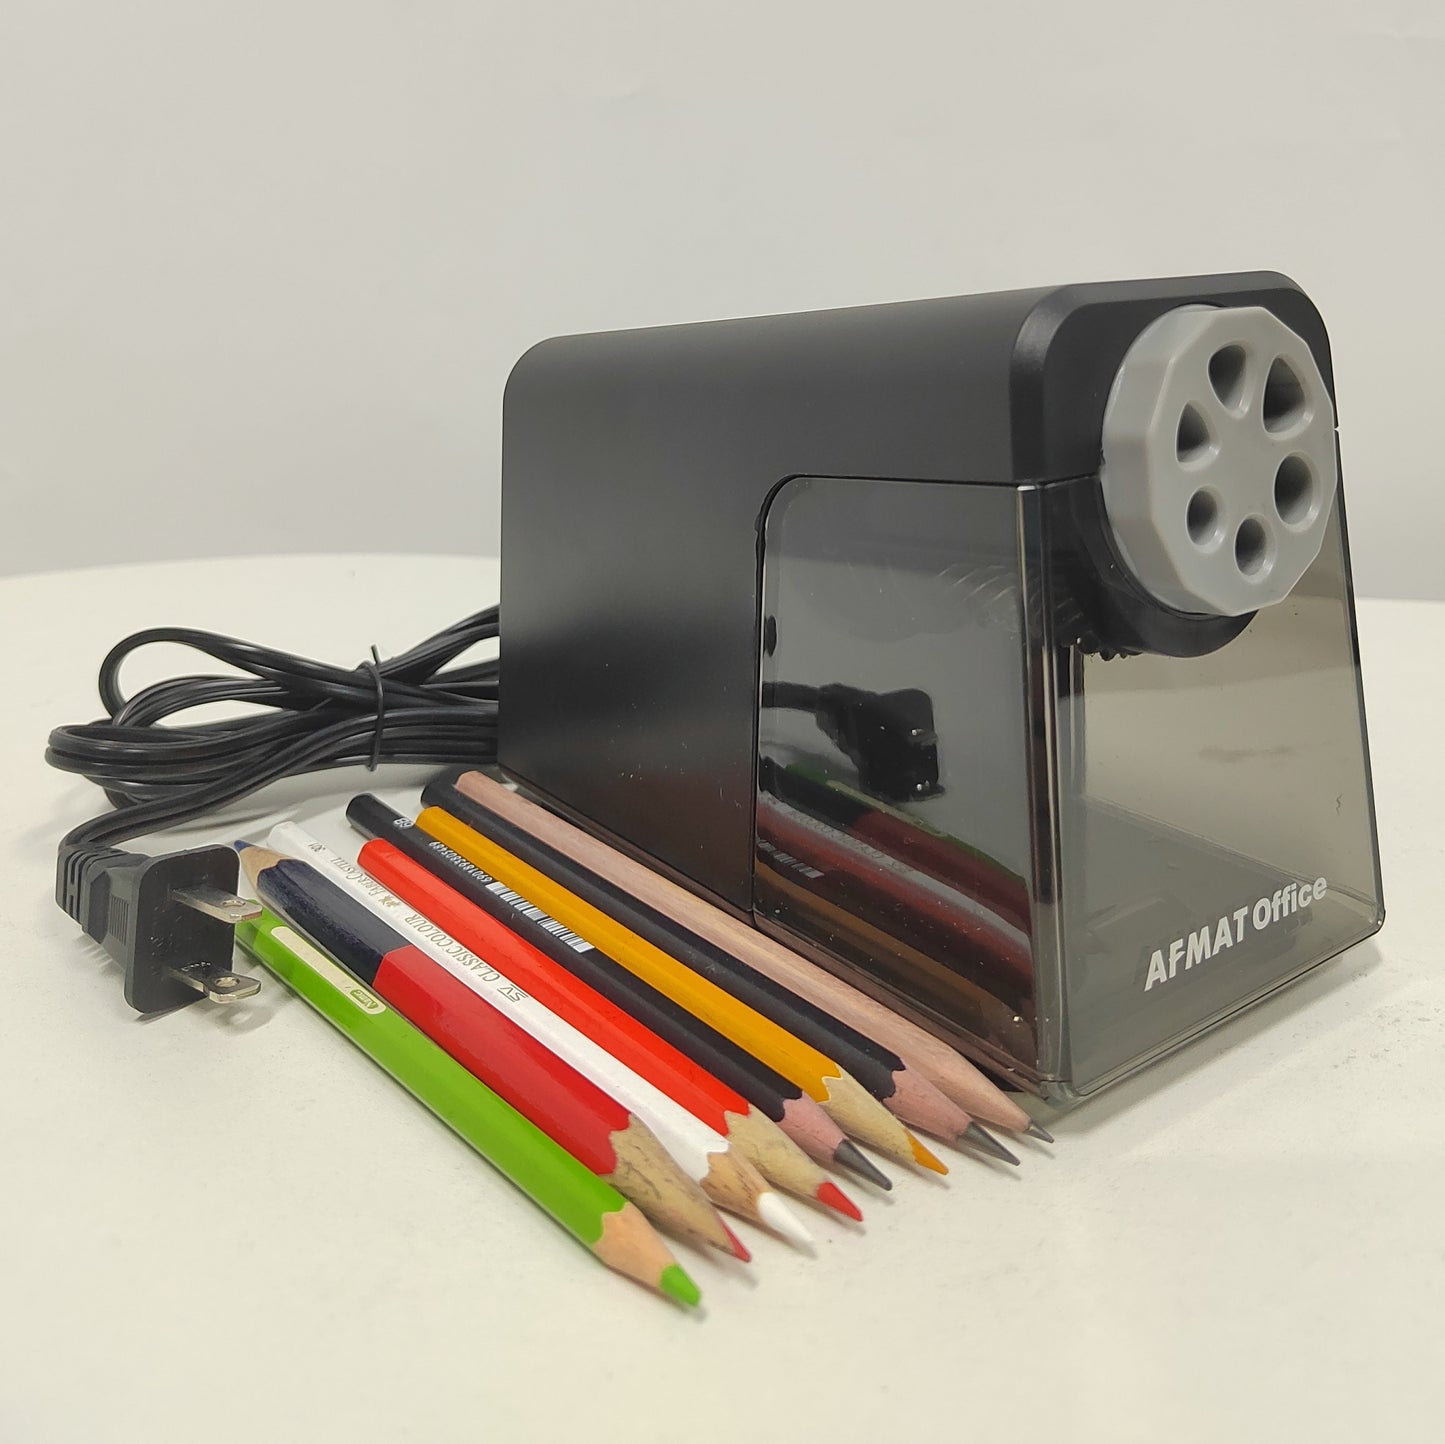 AFMAT Office Electric Pencil Sharpener Heavy Duty, 6 Holes Auto Stop Electric Pencil Sharpener for School, Classroom-PSX1BK